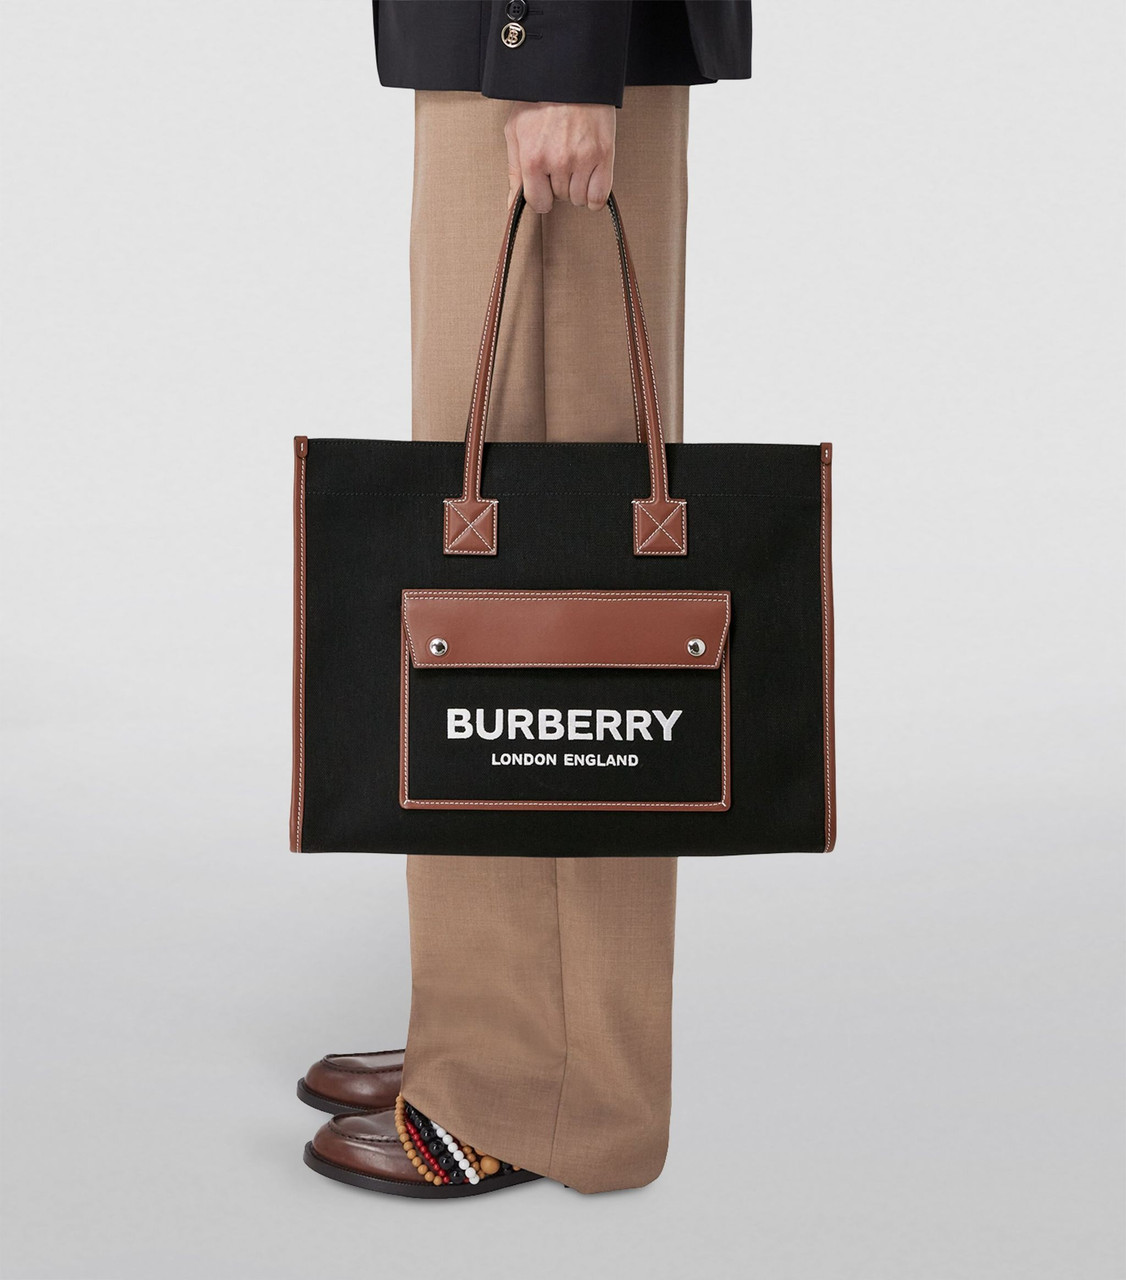 Is Burberry a good bag brand? – LINVELLES